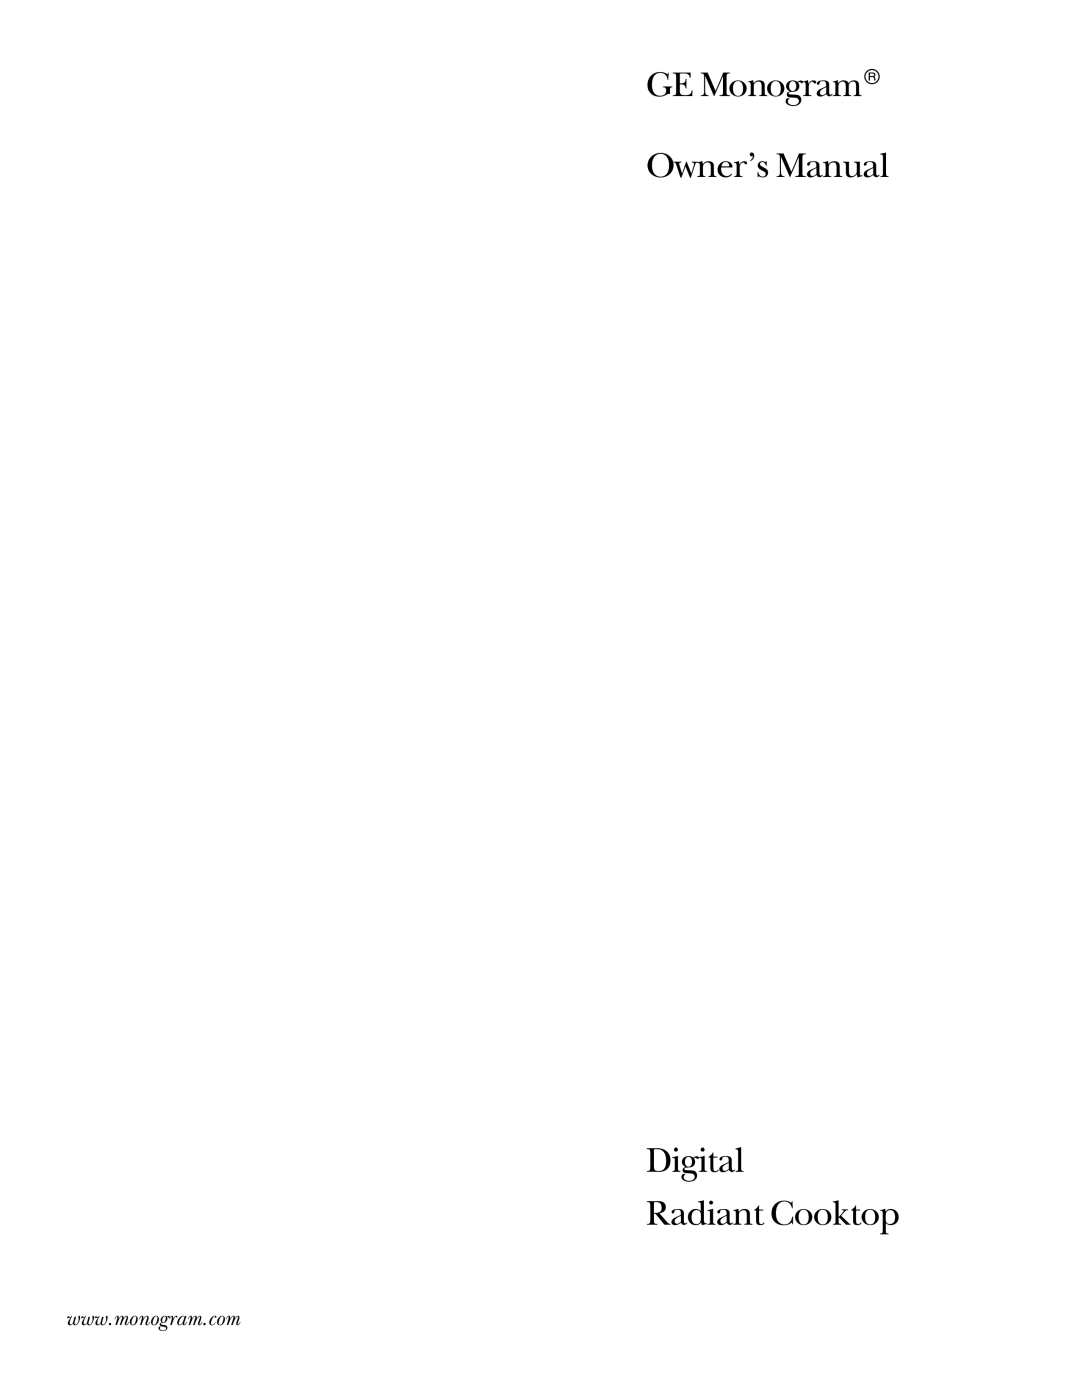 GE Monogram Digital Radiant Cooktop owner manual 